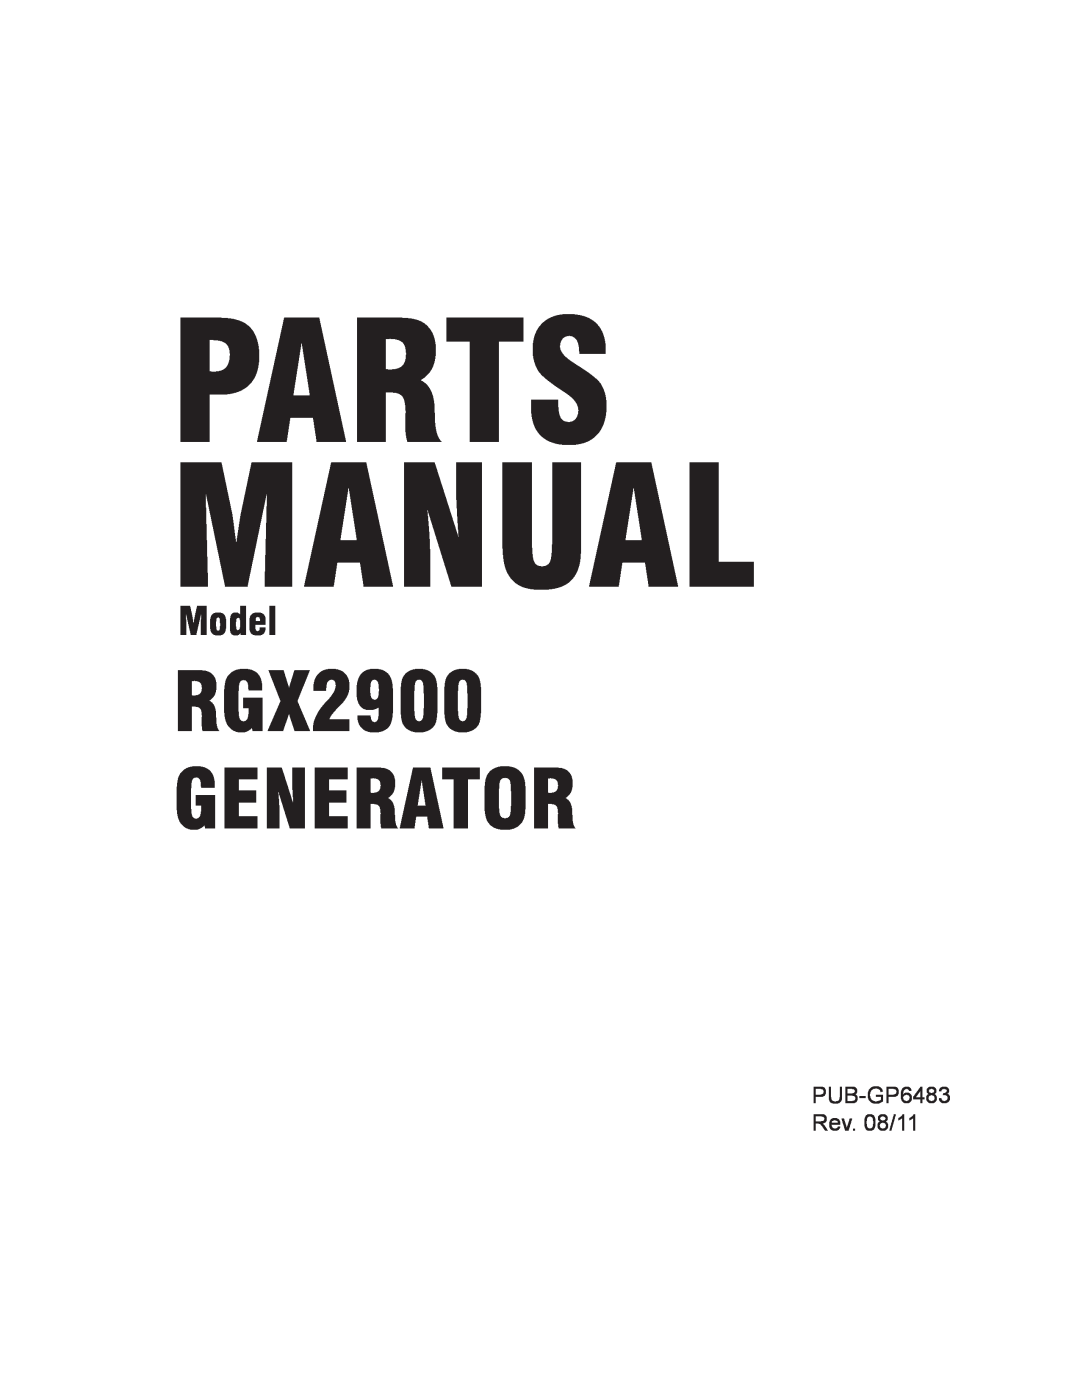 Subaru Robin Power Products manual Parts Manual, RGX2900 GENERATOR, Model, PUB-GP6483Rev. 08/11 